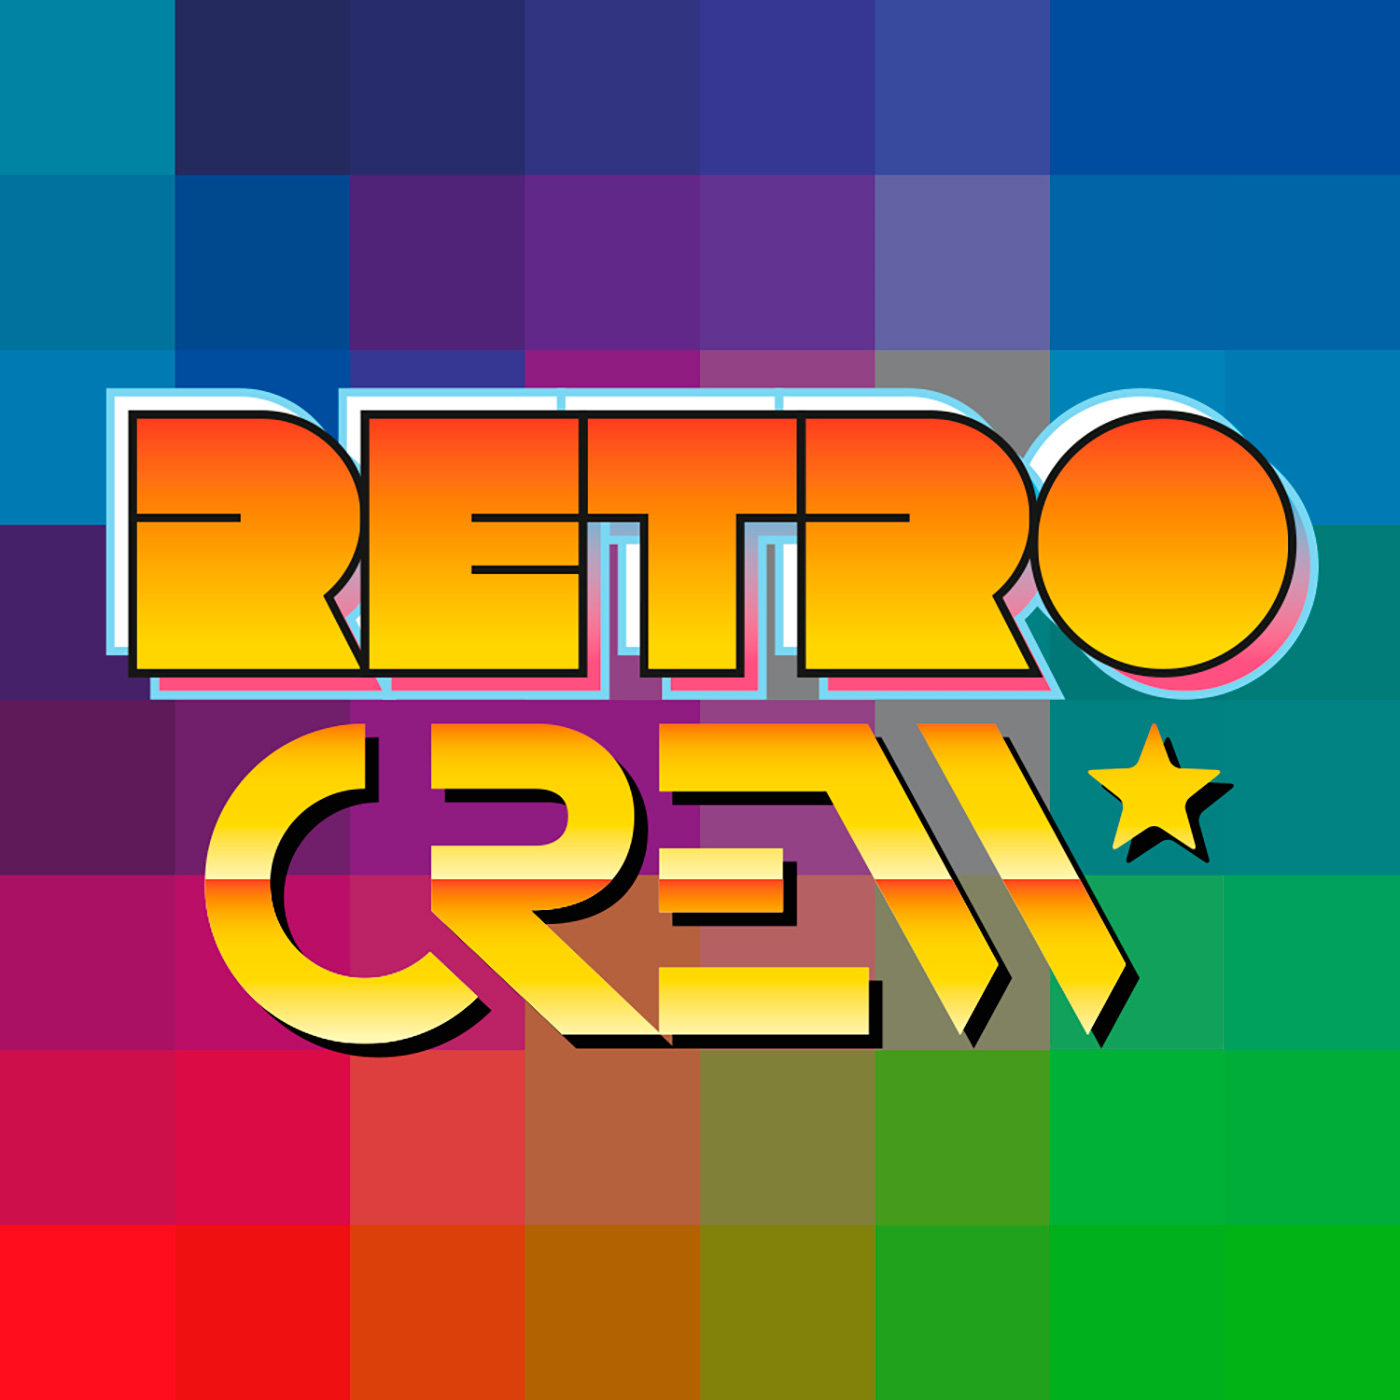 Retro Crew